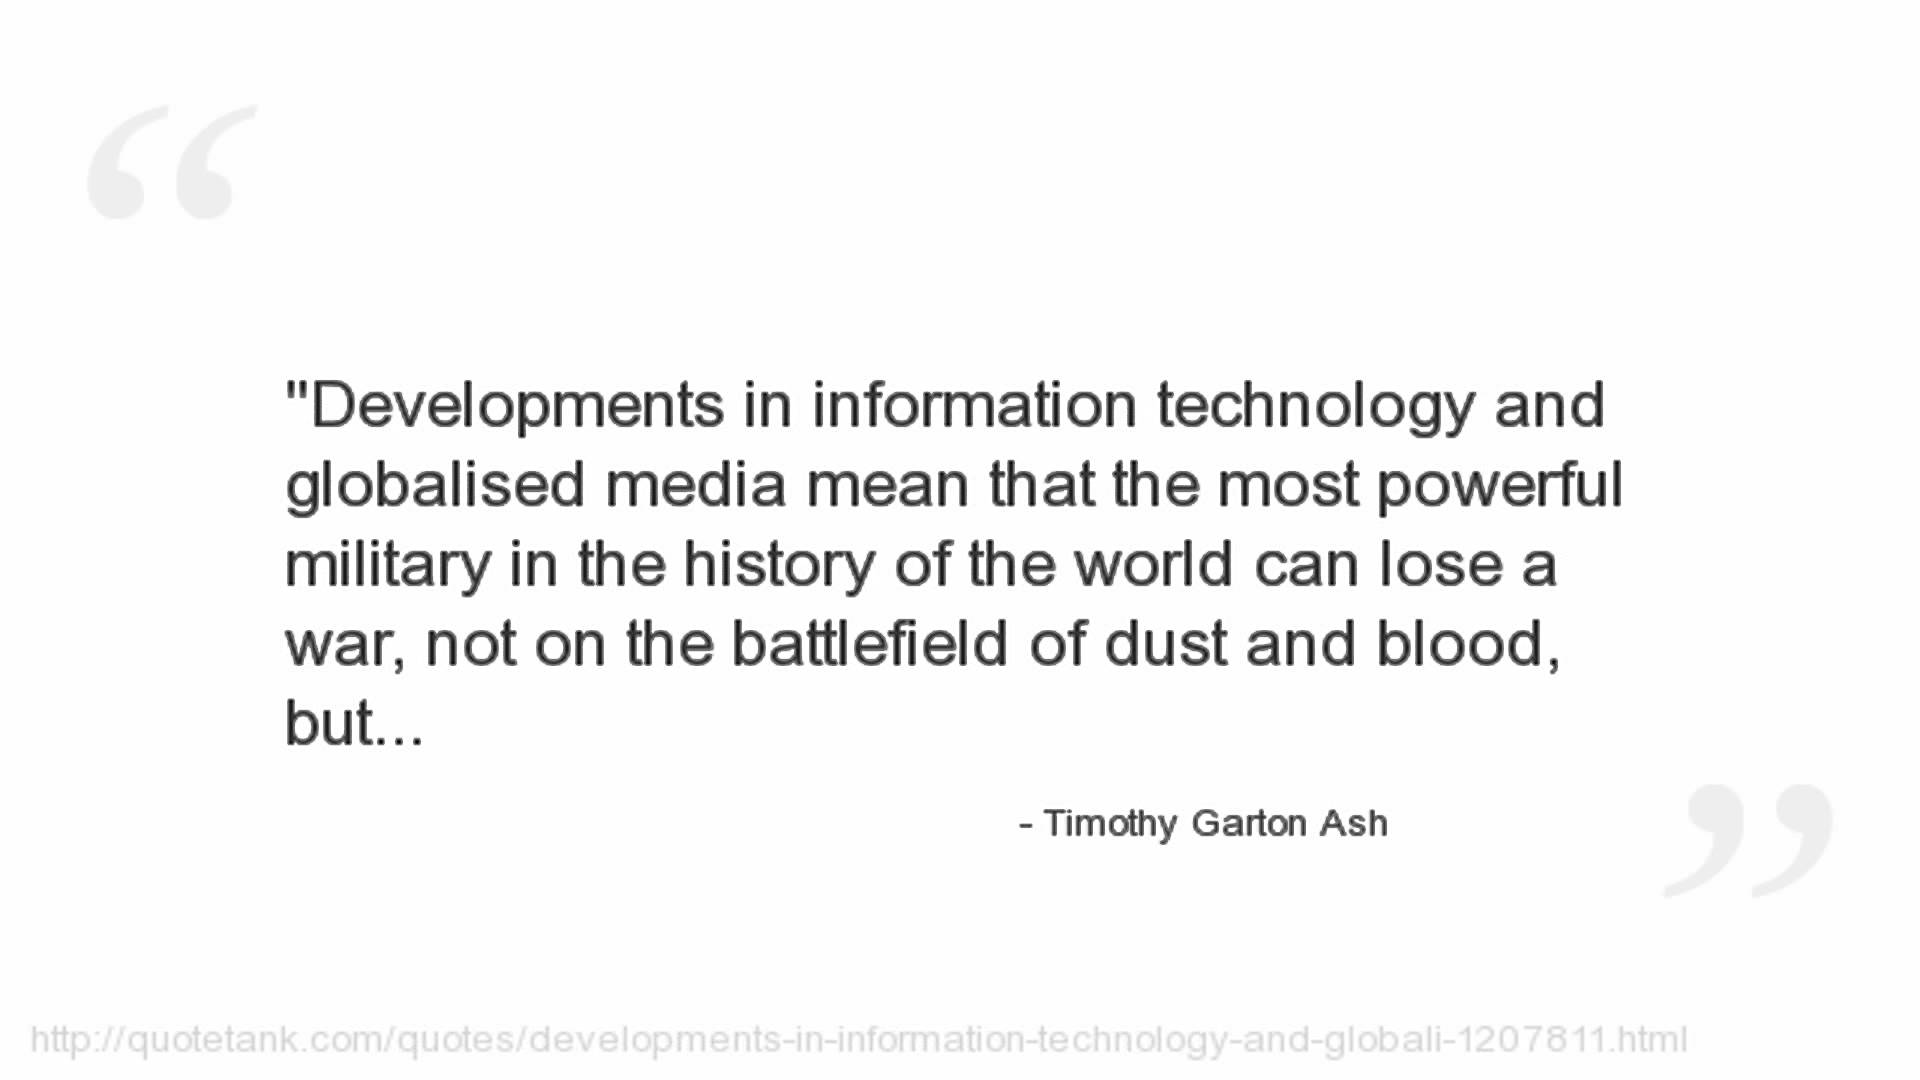 Timothy Garton Ash's quote #2